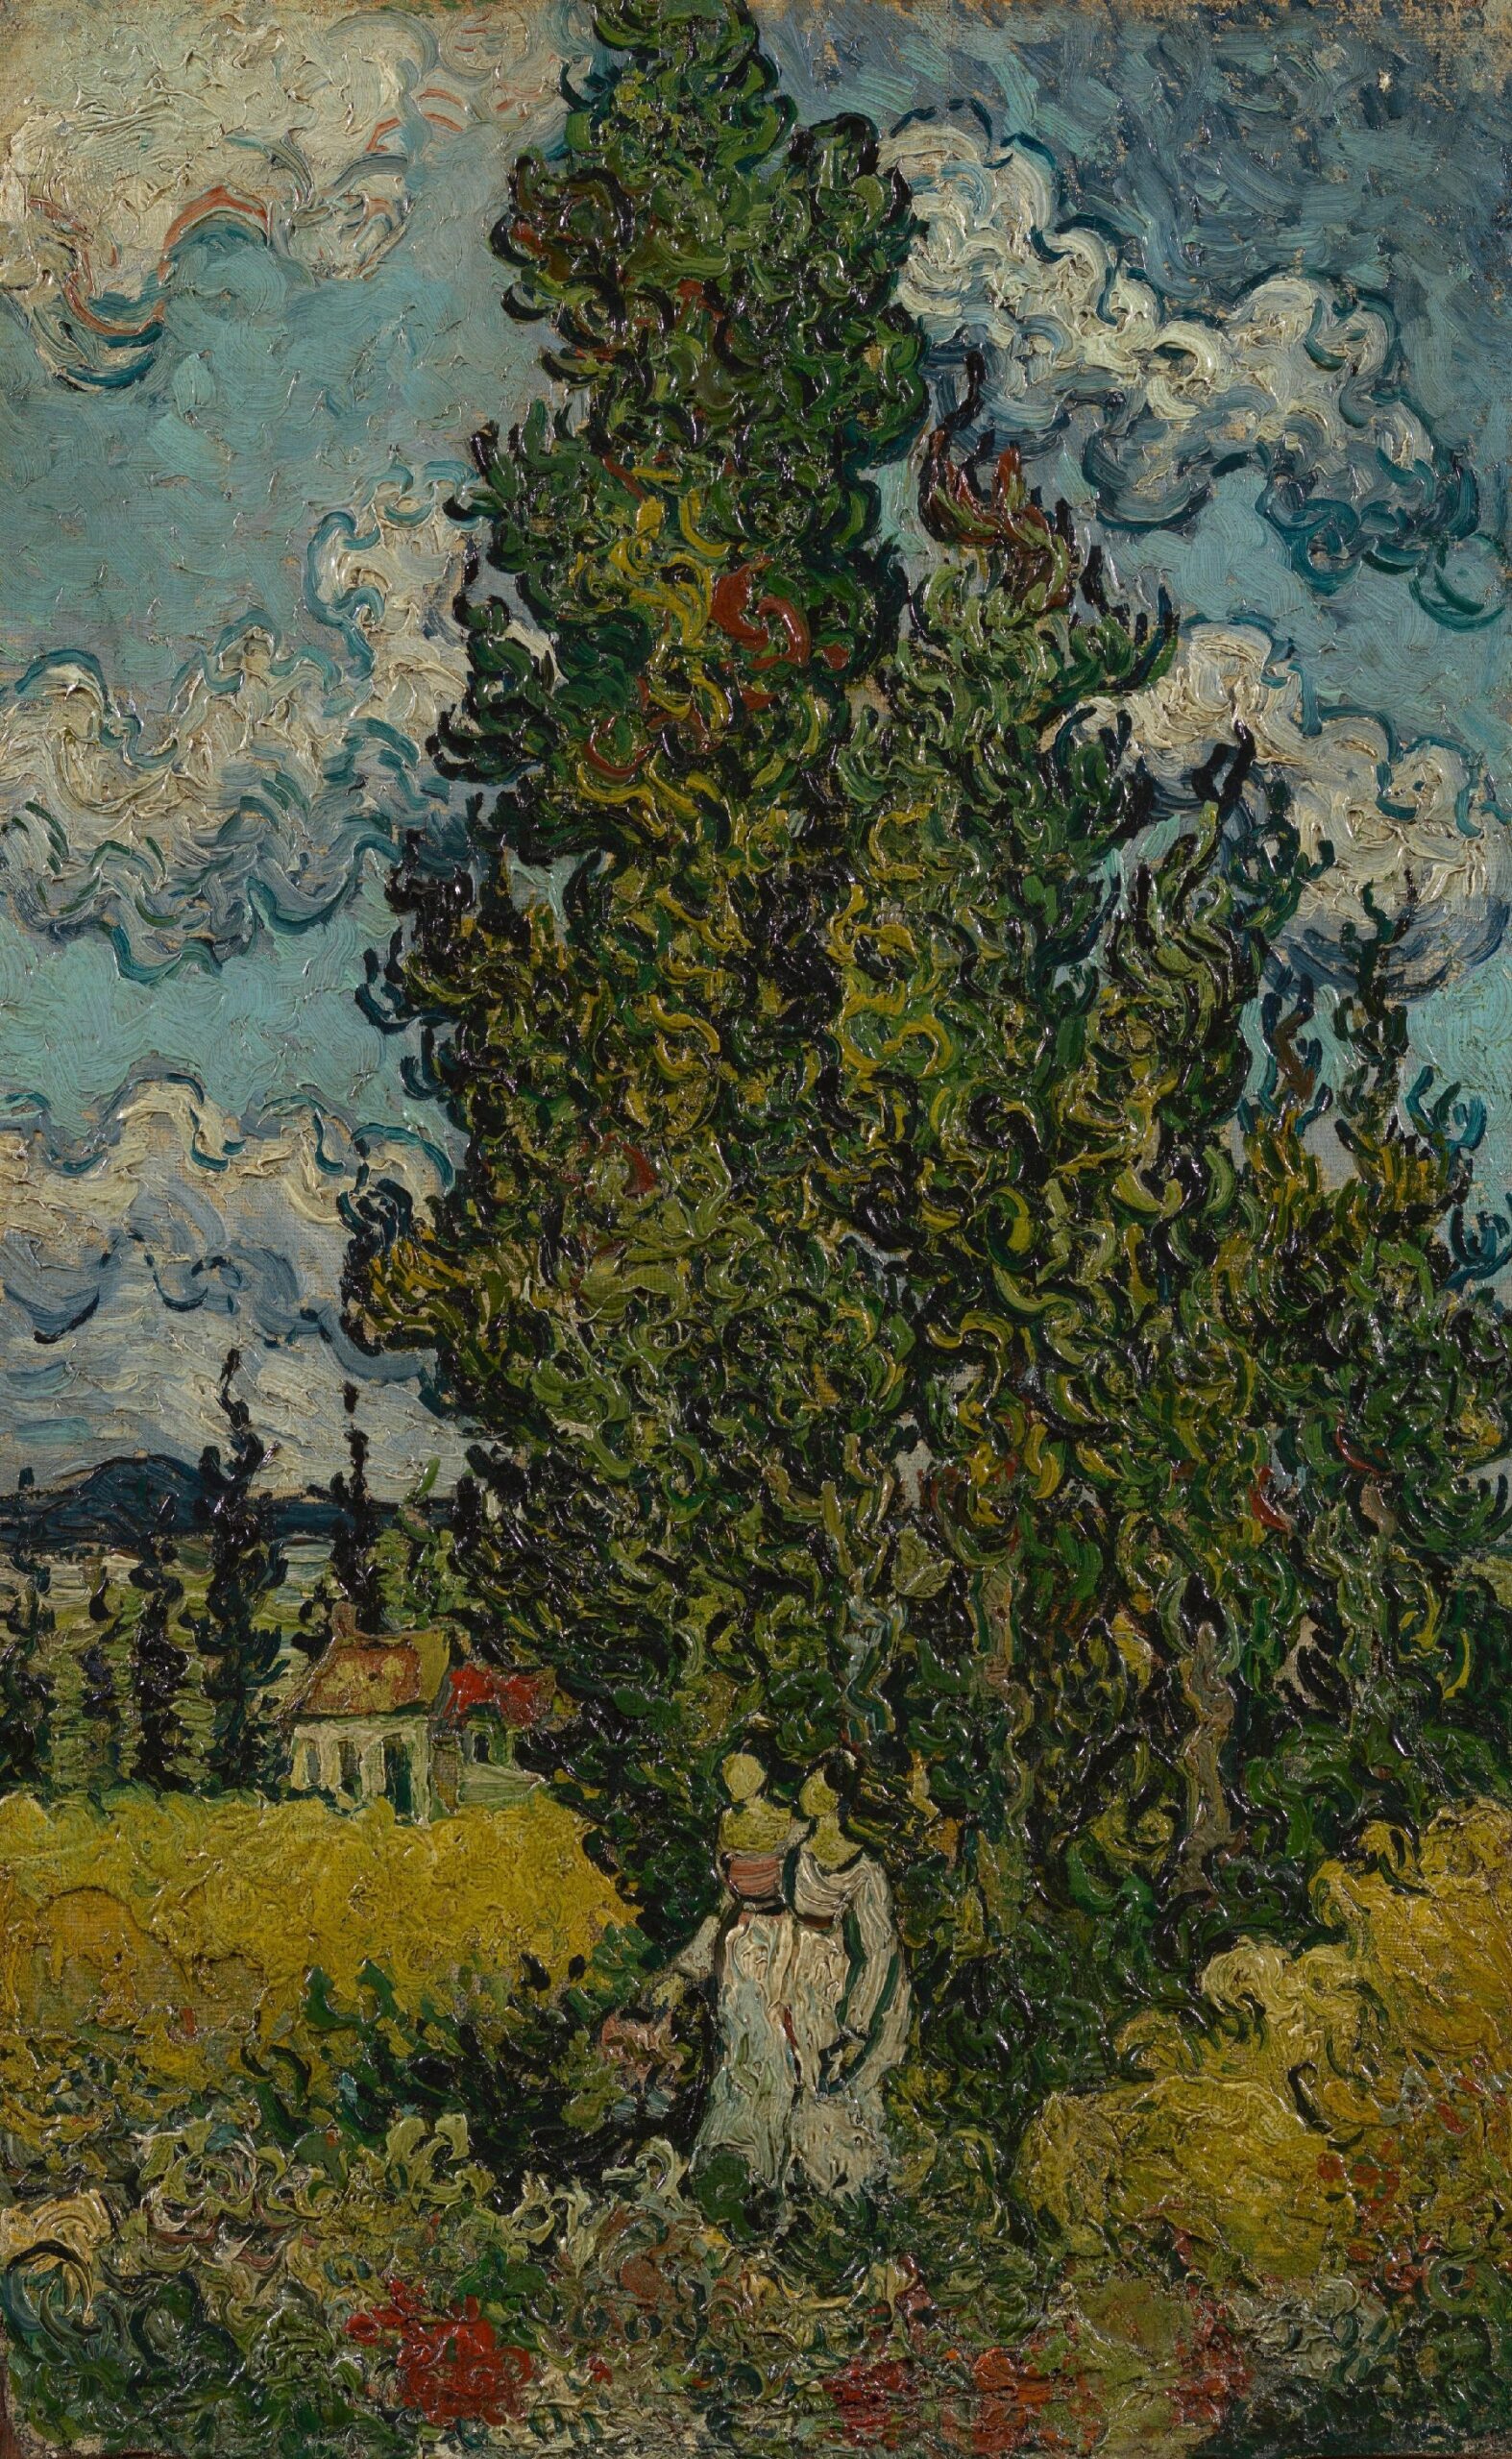 Cipressen en twee vrouwen Vincent van Gogh (1853 - 1890), Saint-Rémy-de-Provence, februari 1890